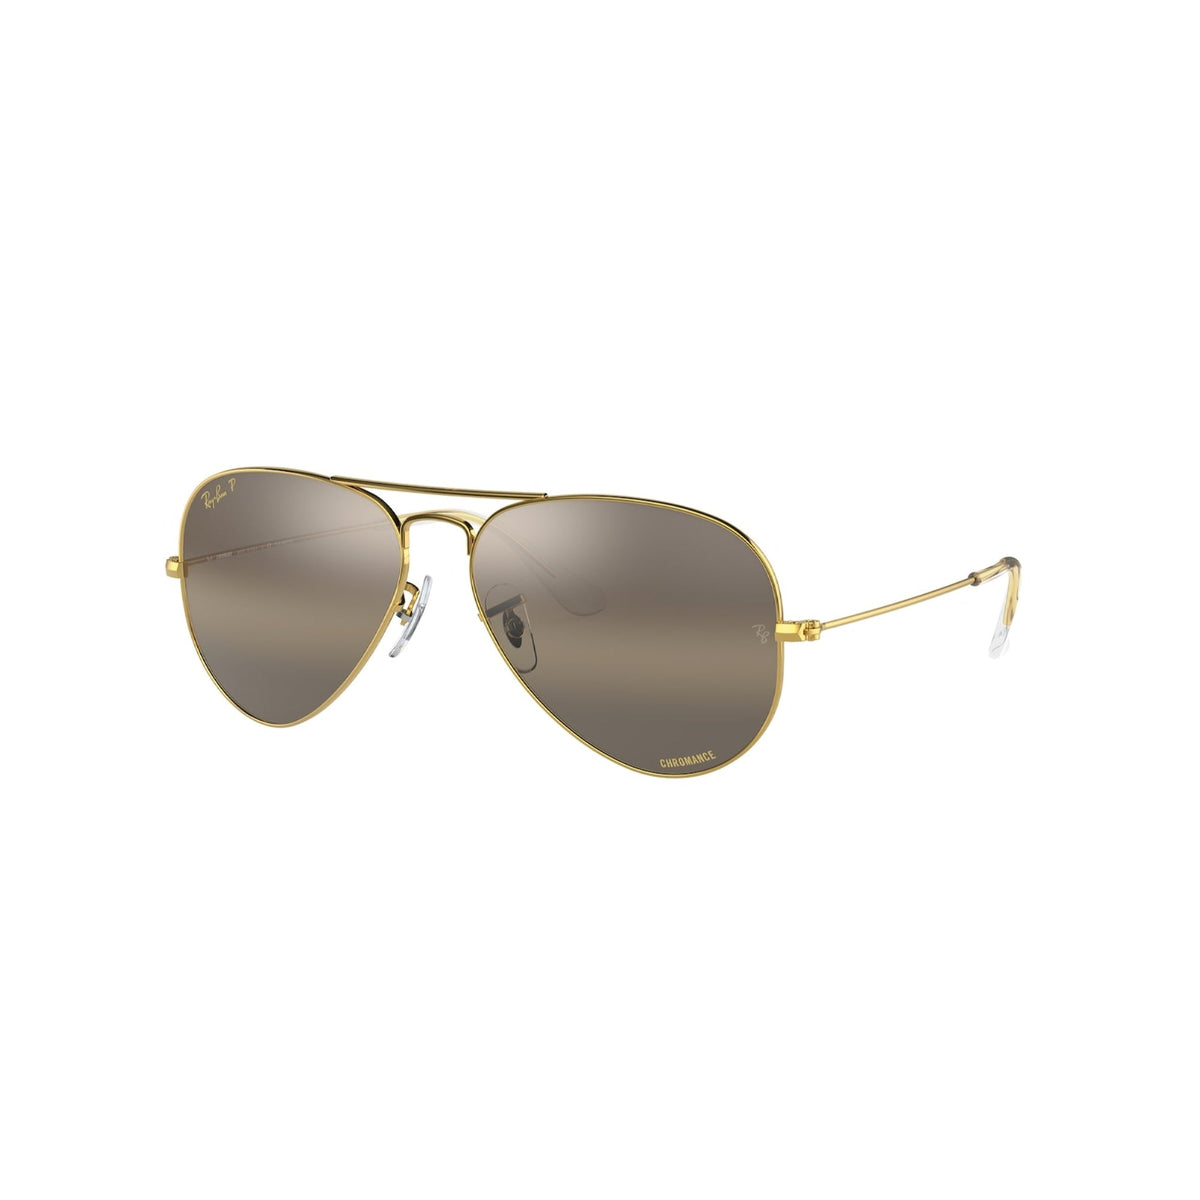 Ray-Ban Unisex Sunglasses Aviator large Metal Gold Polar Clear Gradient Dark Brown Metal Metal  0RB3025 9196G5 58